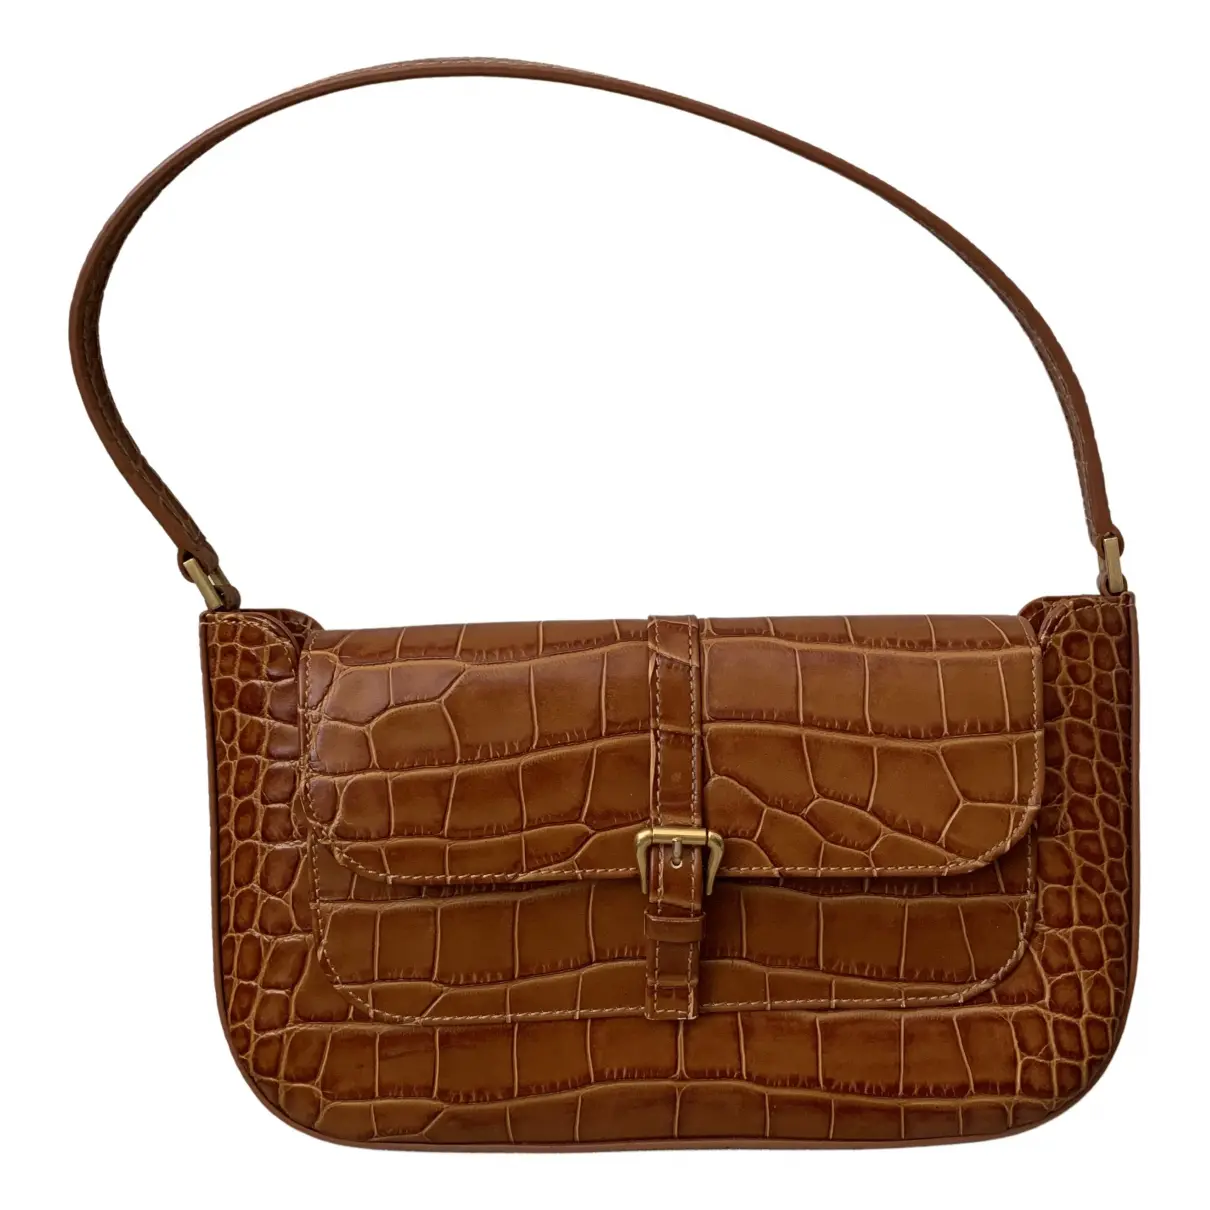 Miranda leather handbag By Far